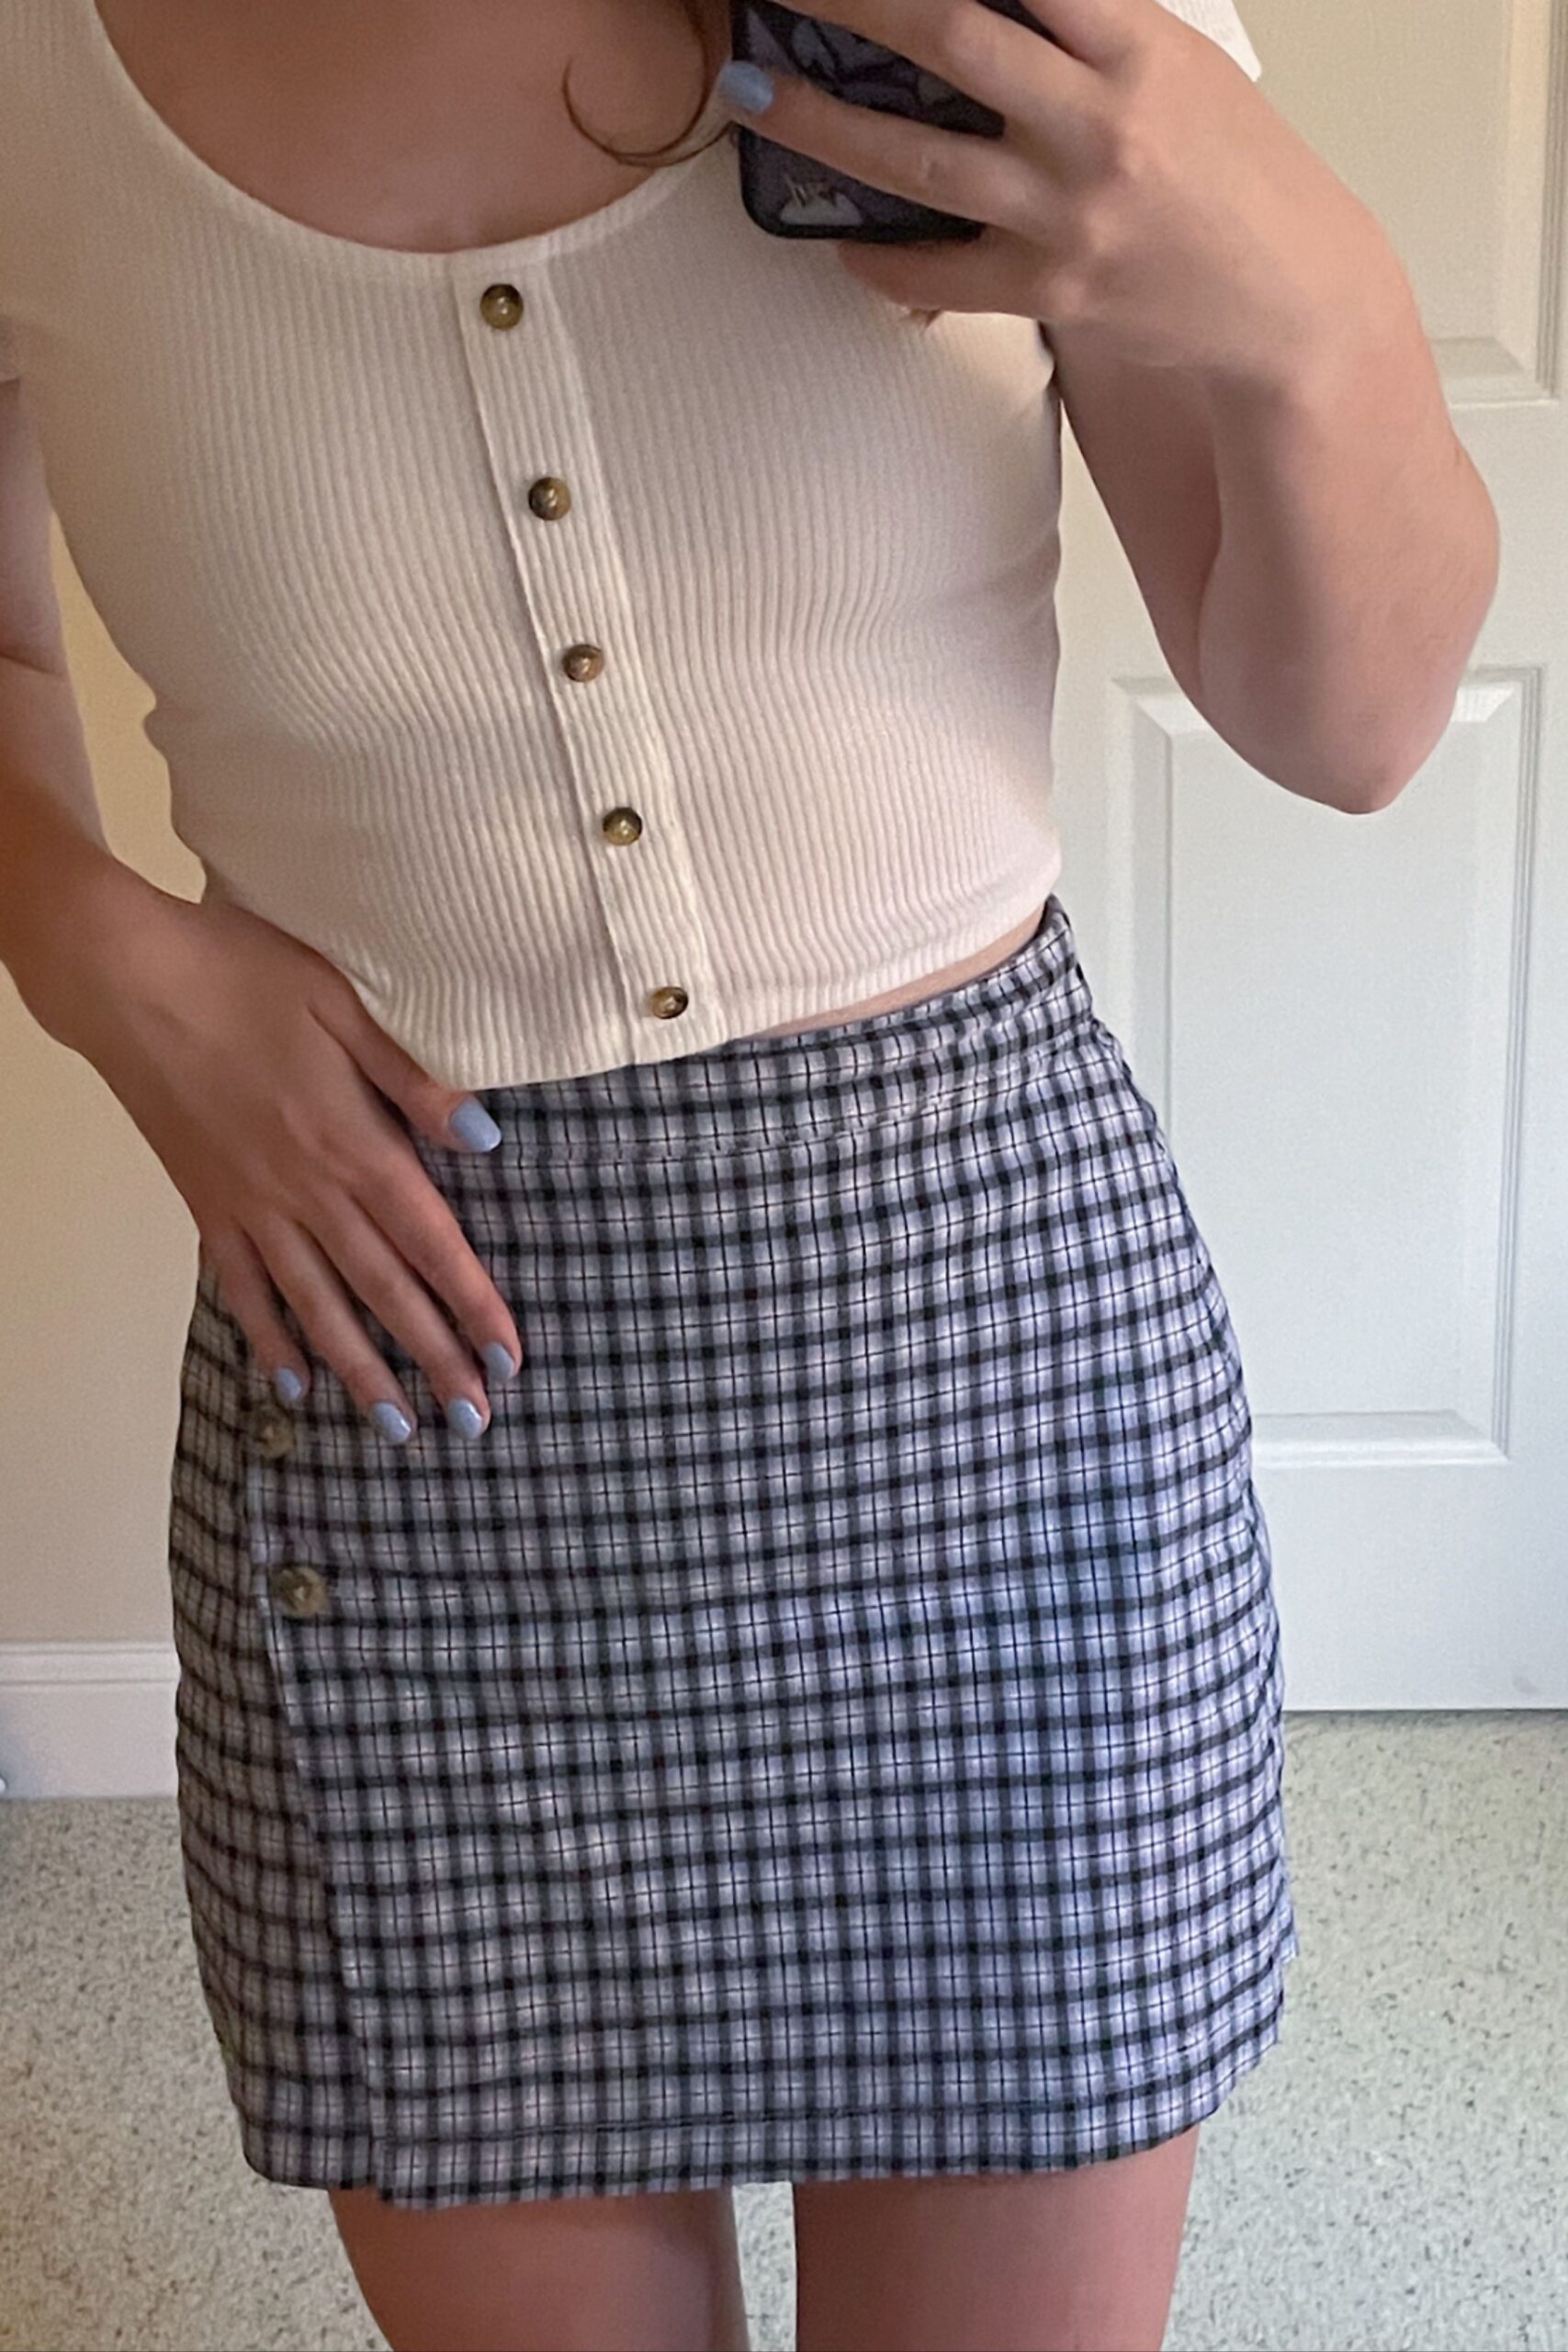 Blue Plaid Skirt Outfit Ideas